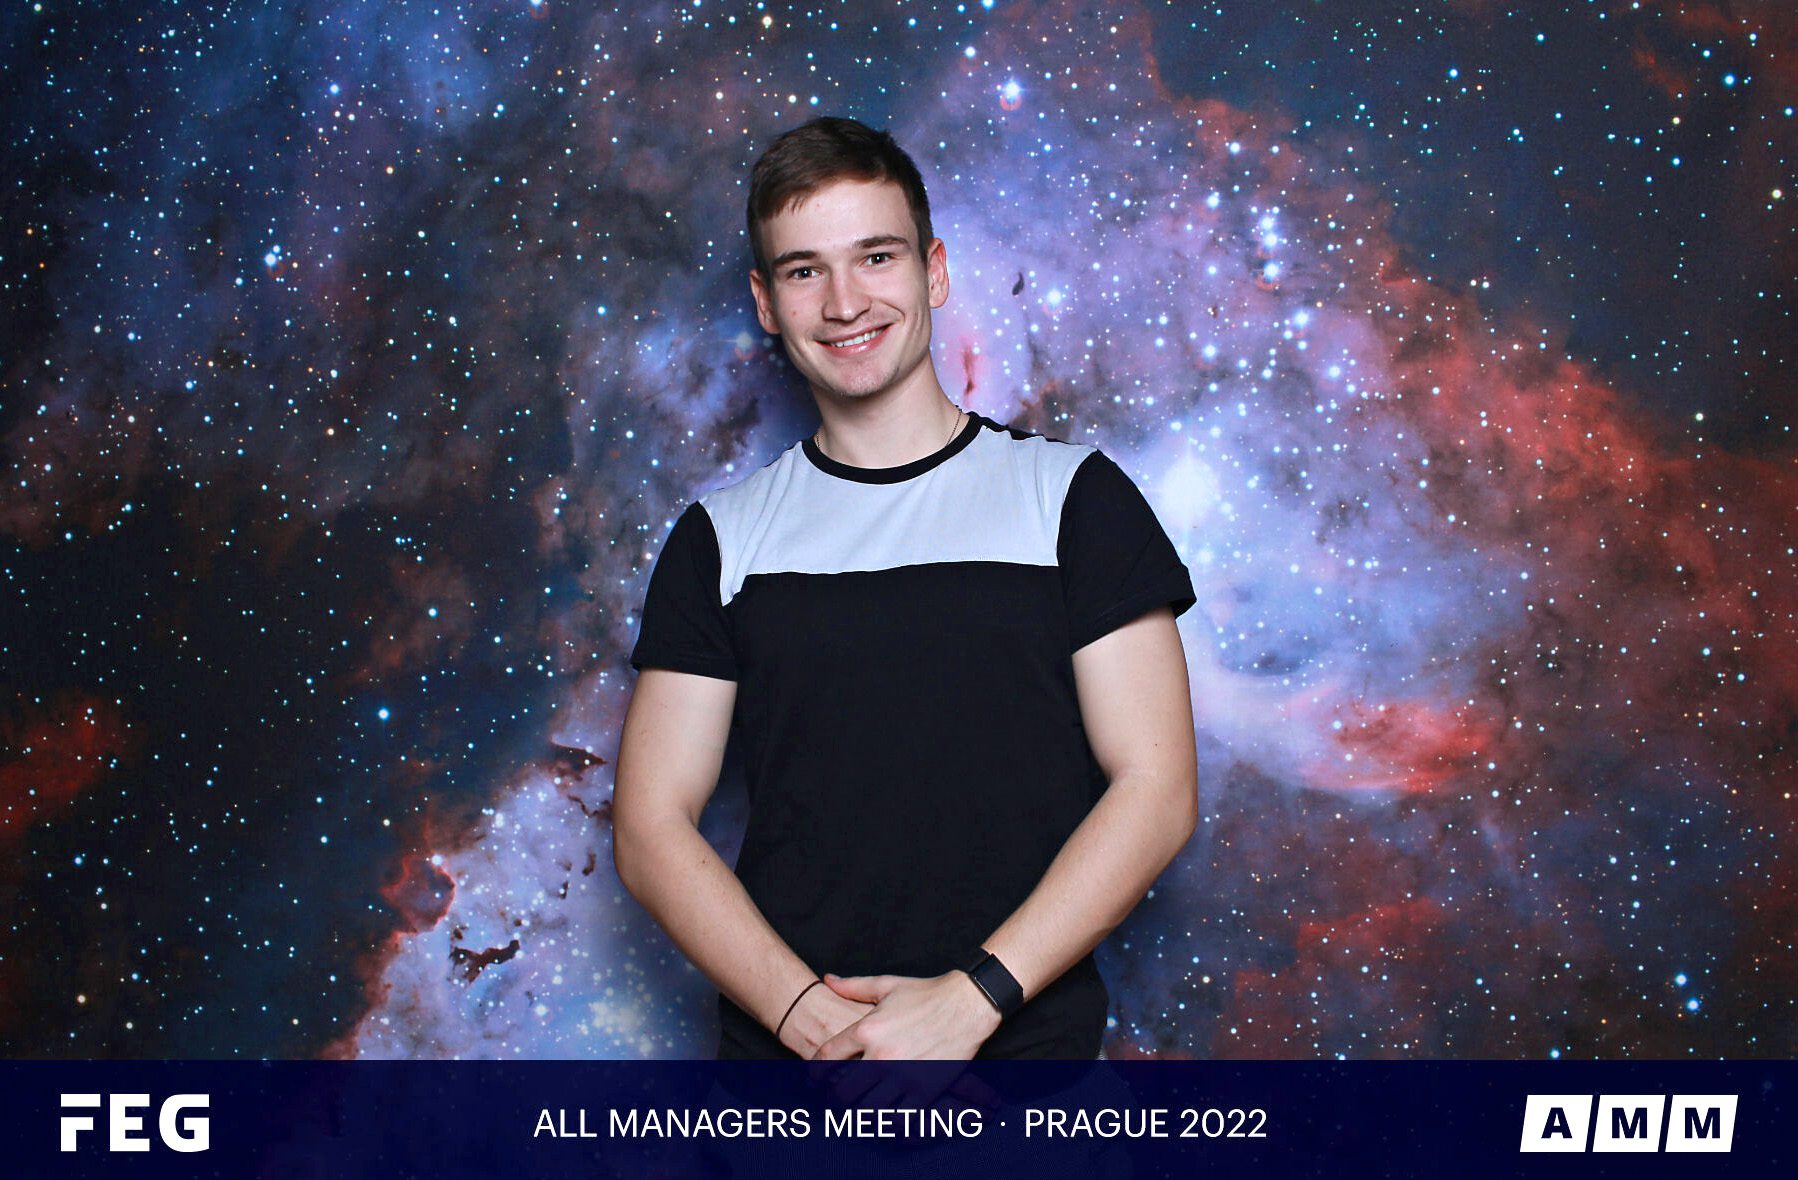 fotokoutek-konference-praha-feg-all-managers-meeting-29-11-2022-808758